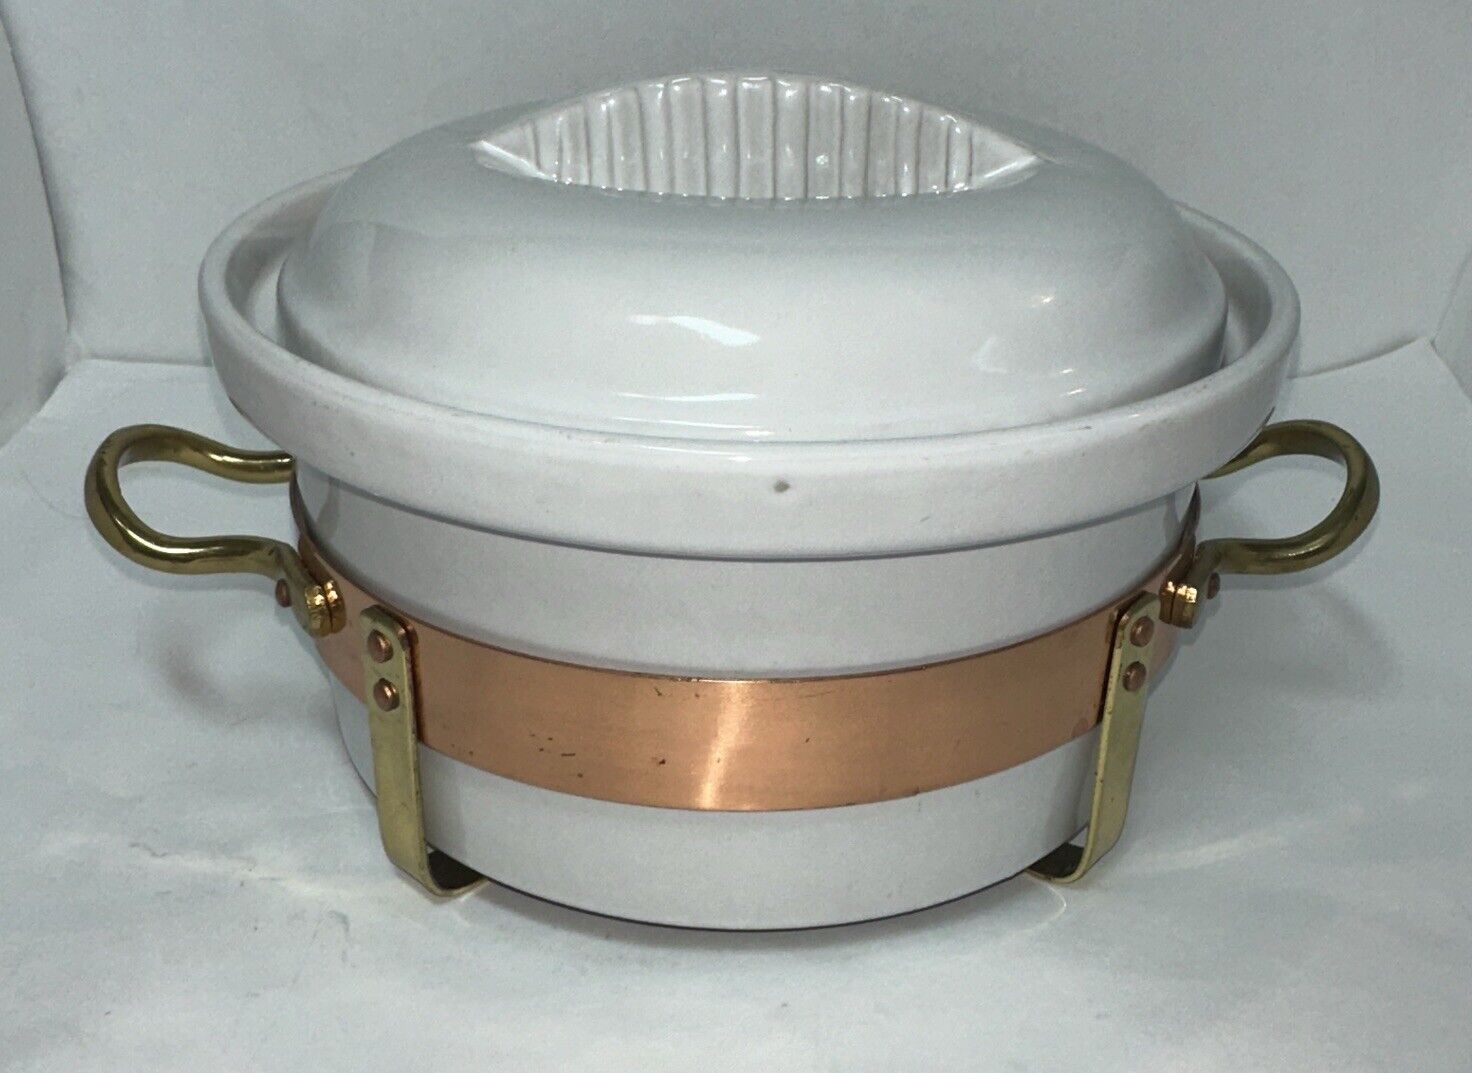 VTG 2 Qt White Ceramic Covered Casserole Dish w/Copper Stand w/Brass Handles